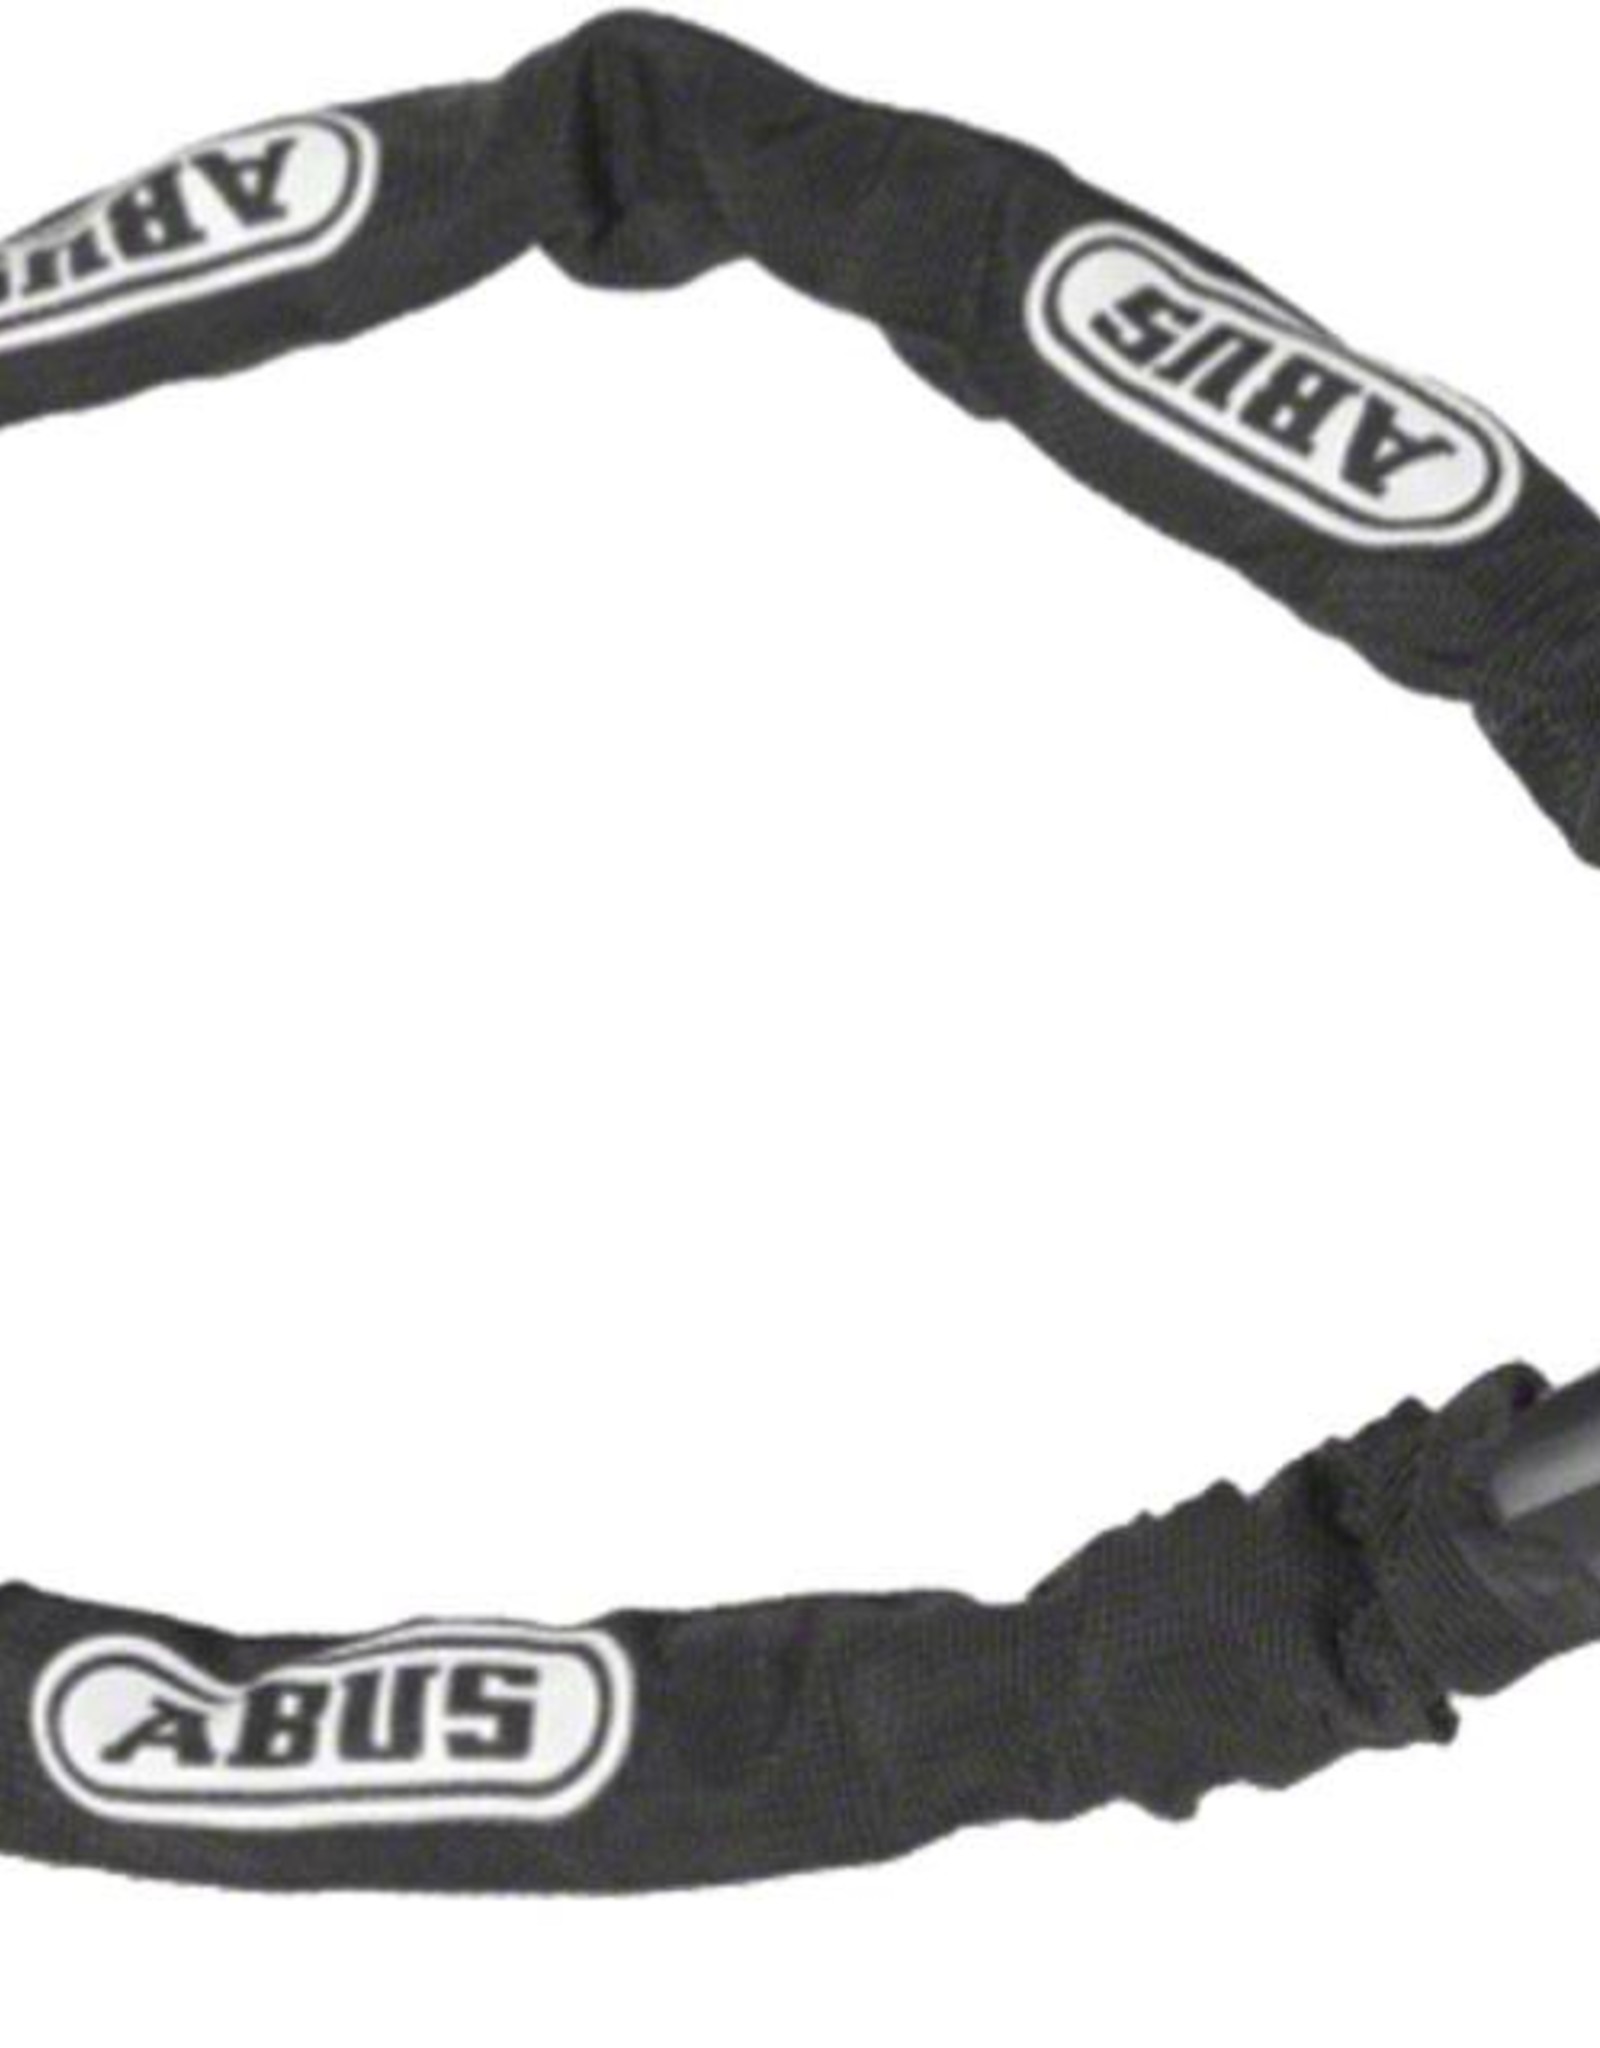 Abus Abus - Chain Lock -  8807K/85 BK - Steel-O-Chain, 7mm square links